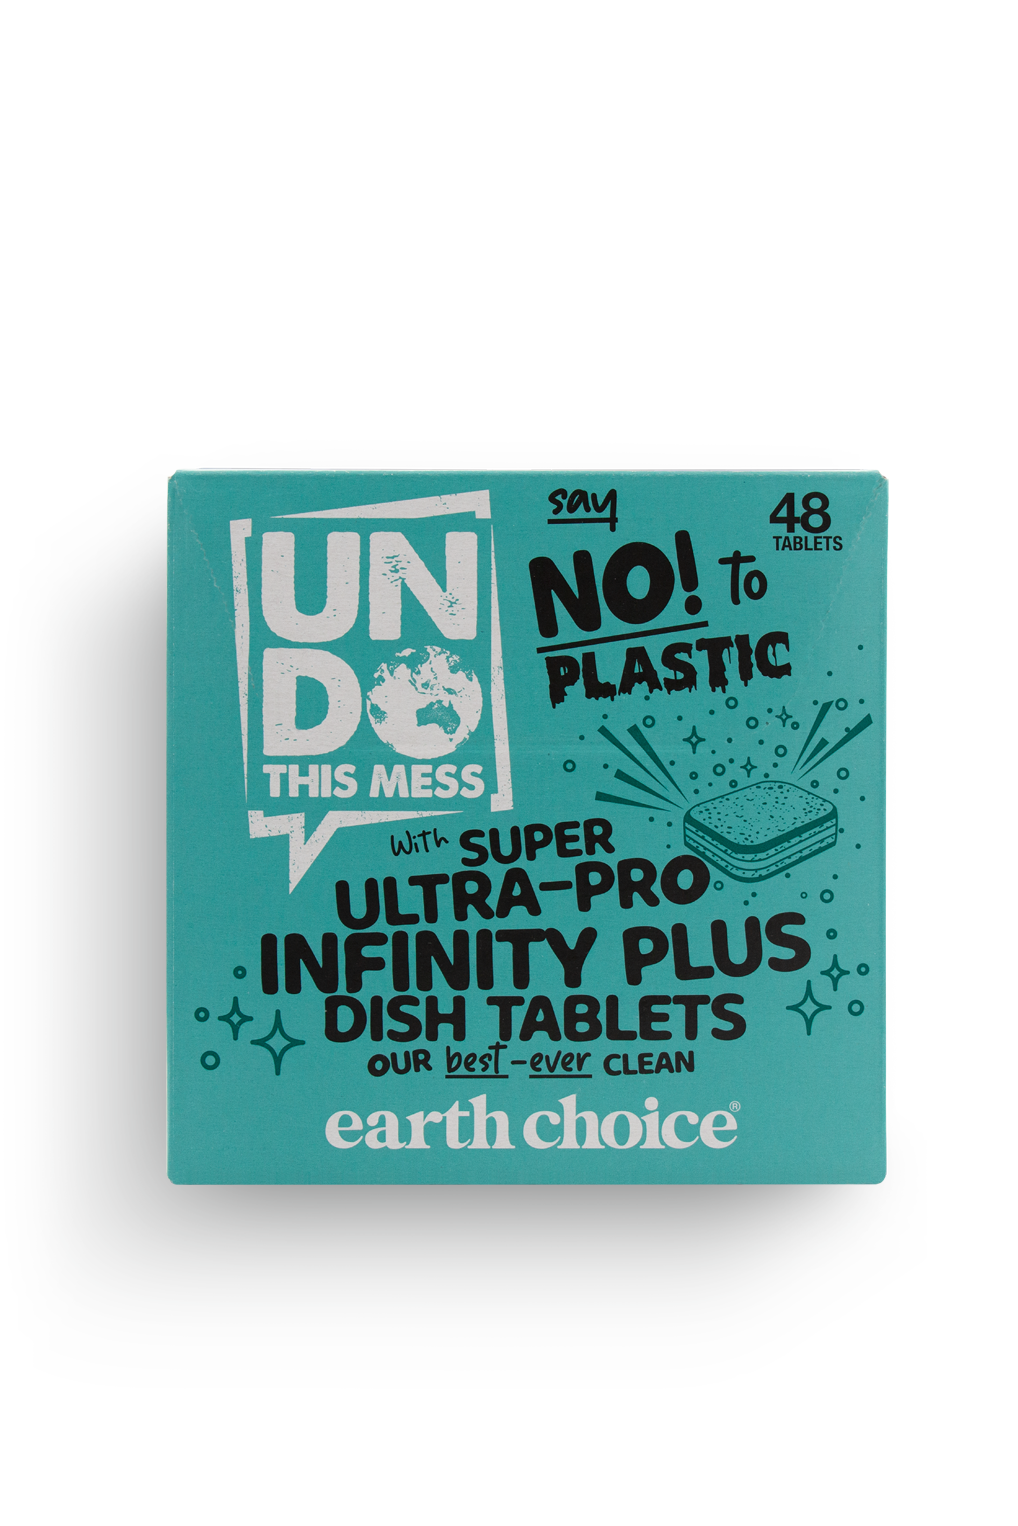 SUPER ULTRA-PRO INFINITY PLUS Dish Tablets